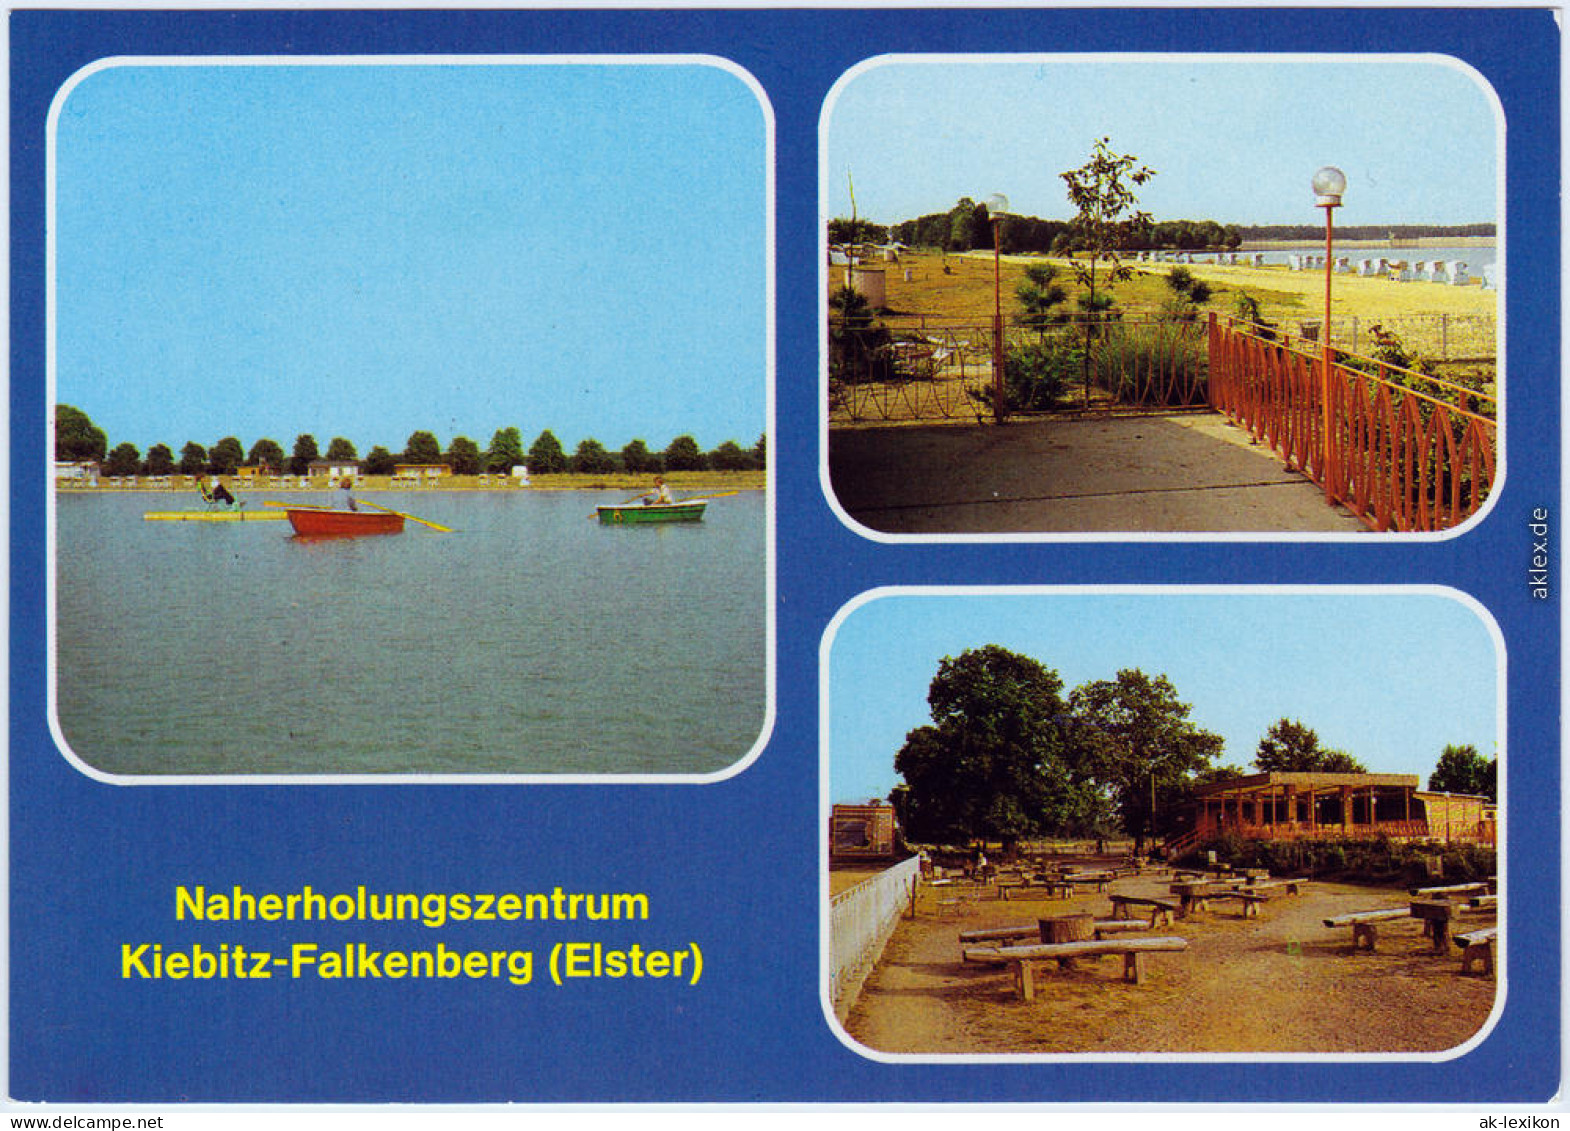 Falkenberg (Elster) Naherholungszentrum Kiebitz-Falkenberg 1984  - Falkenberg